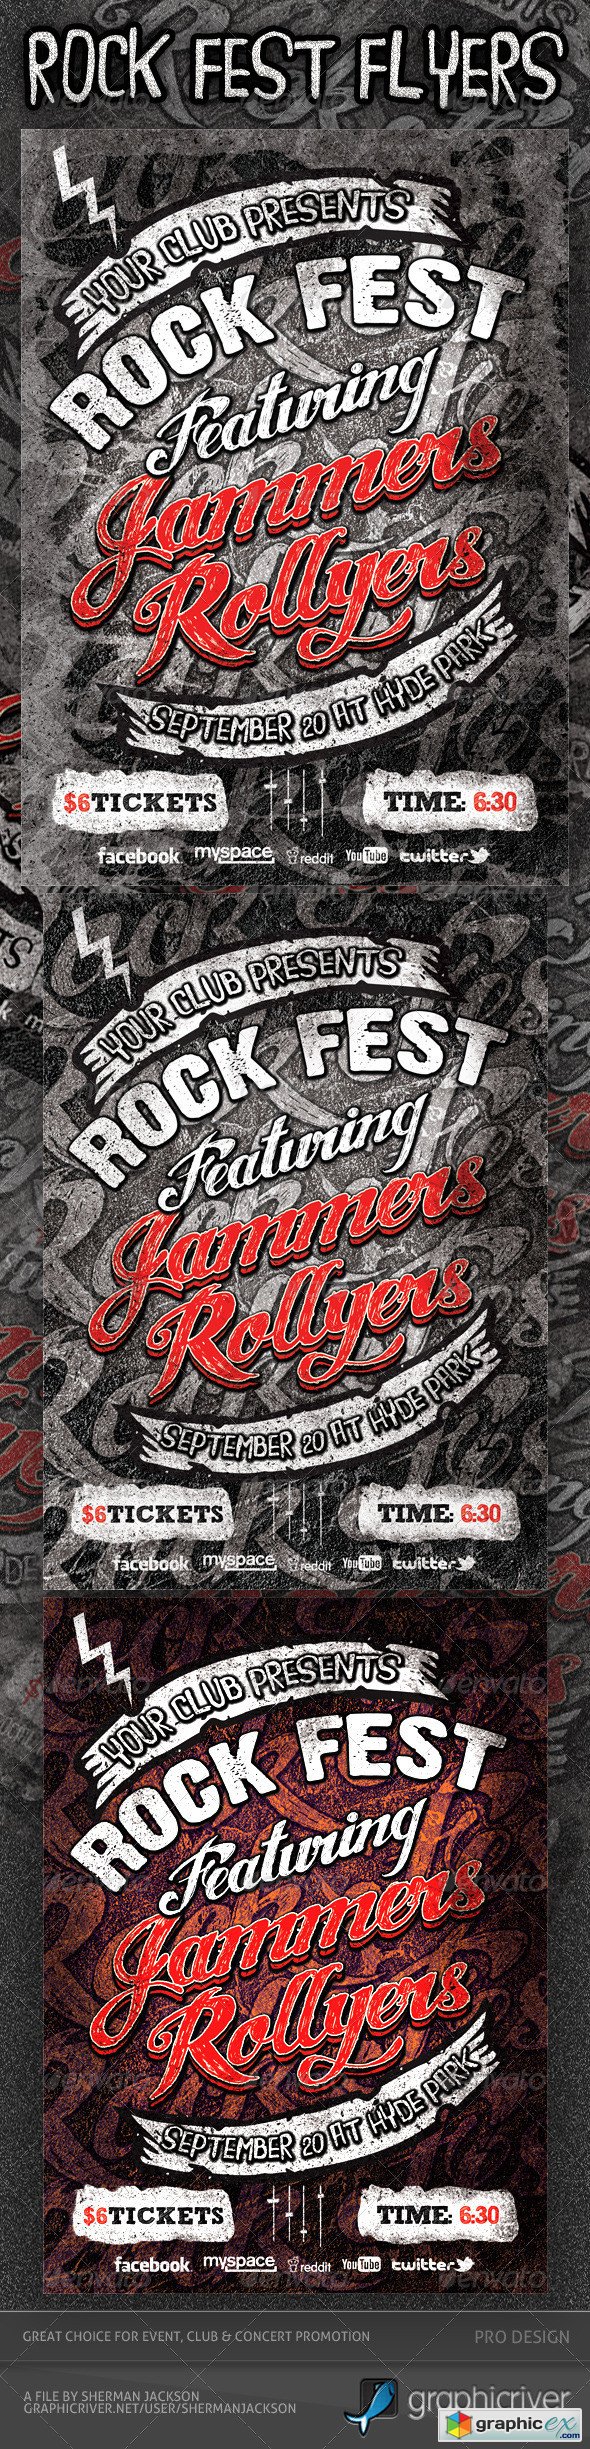 Rock Fest Typographic Flyer PSD Template